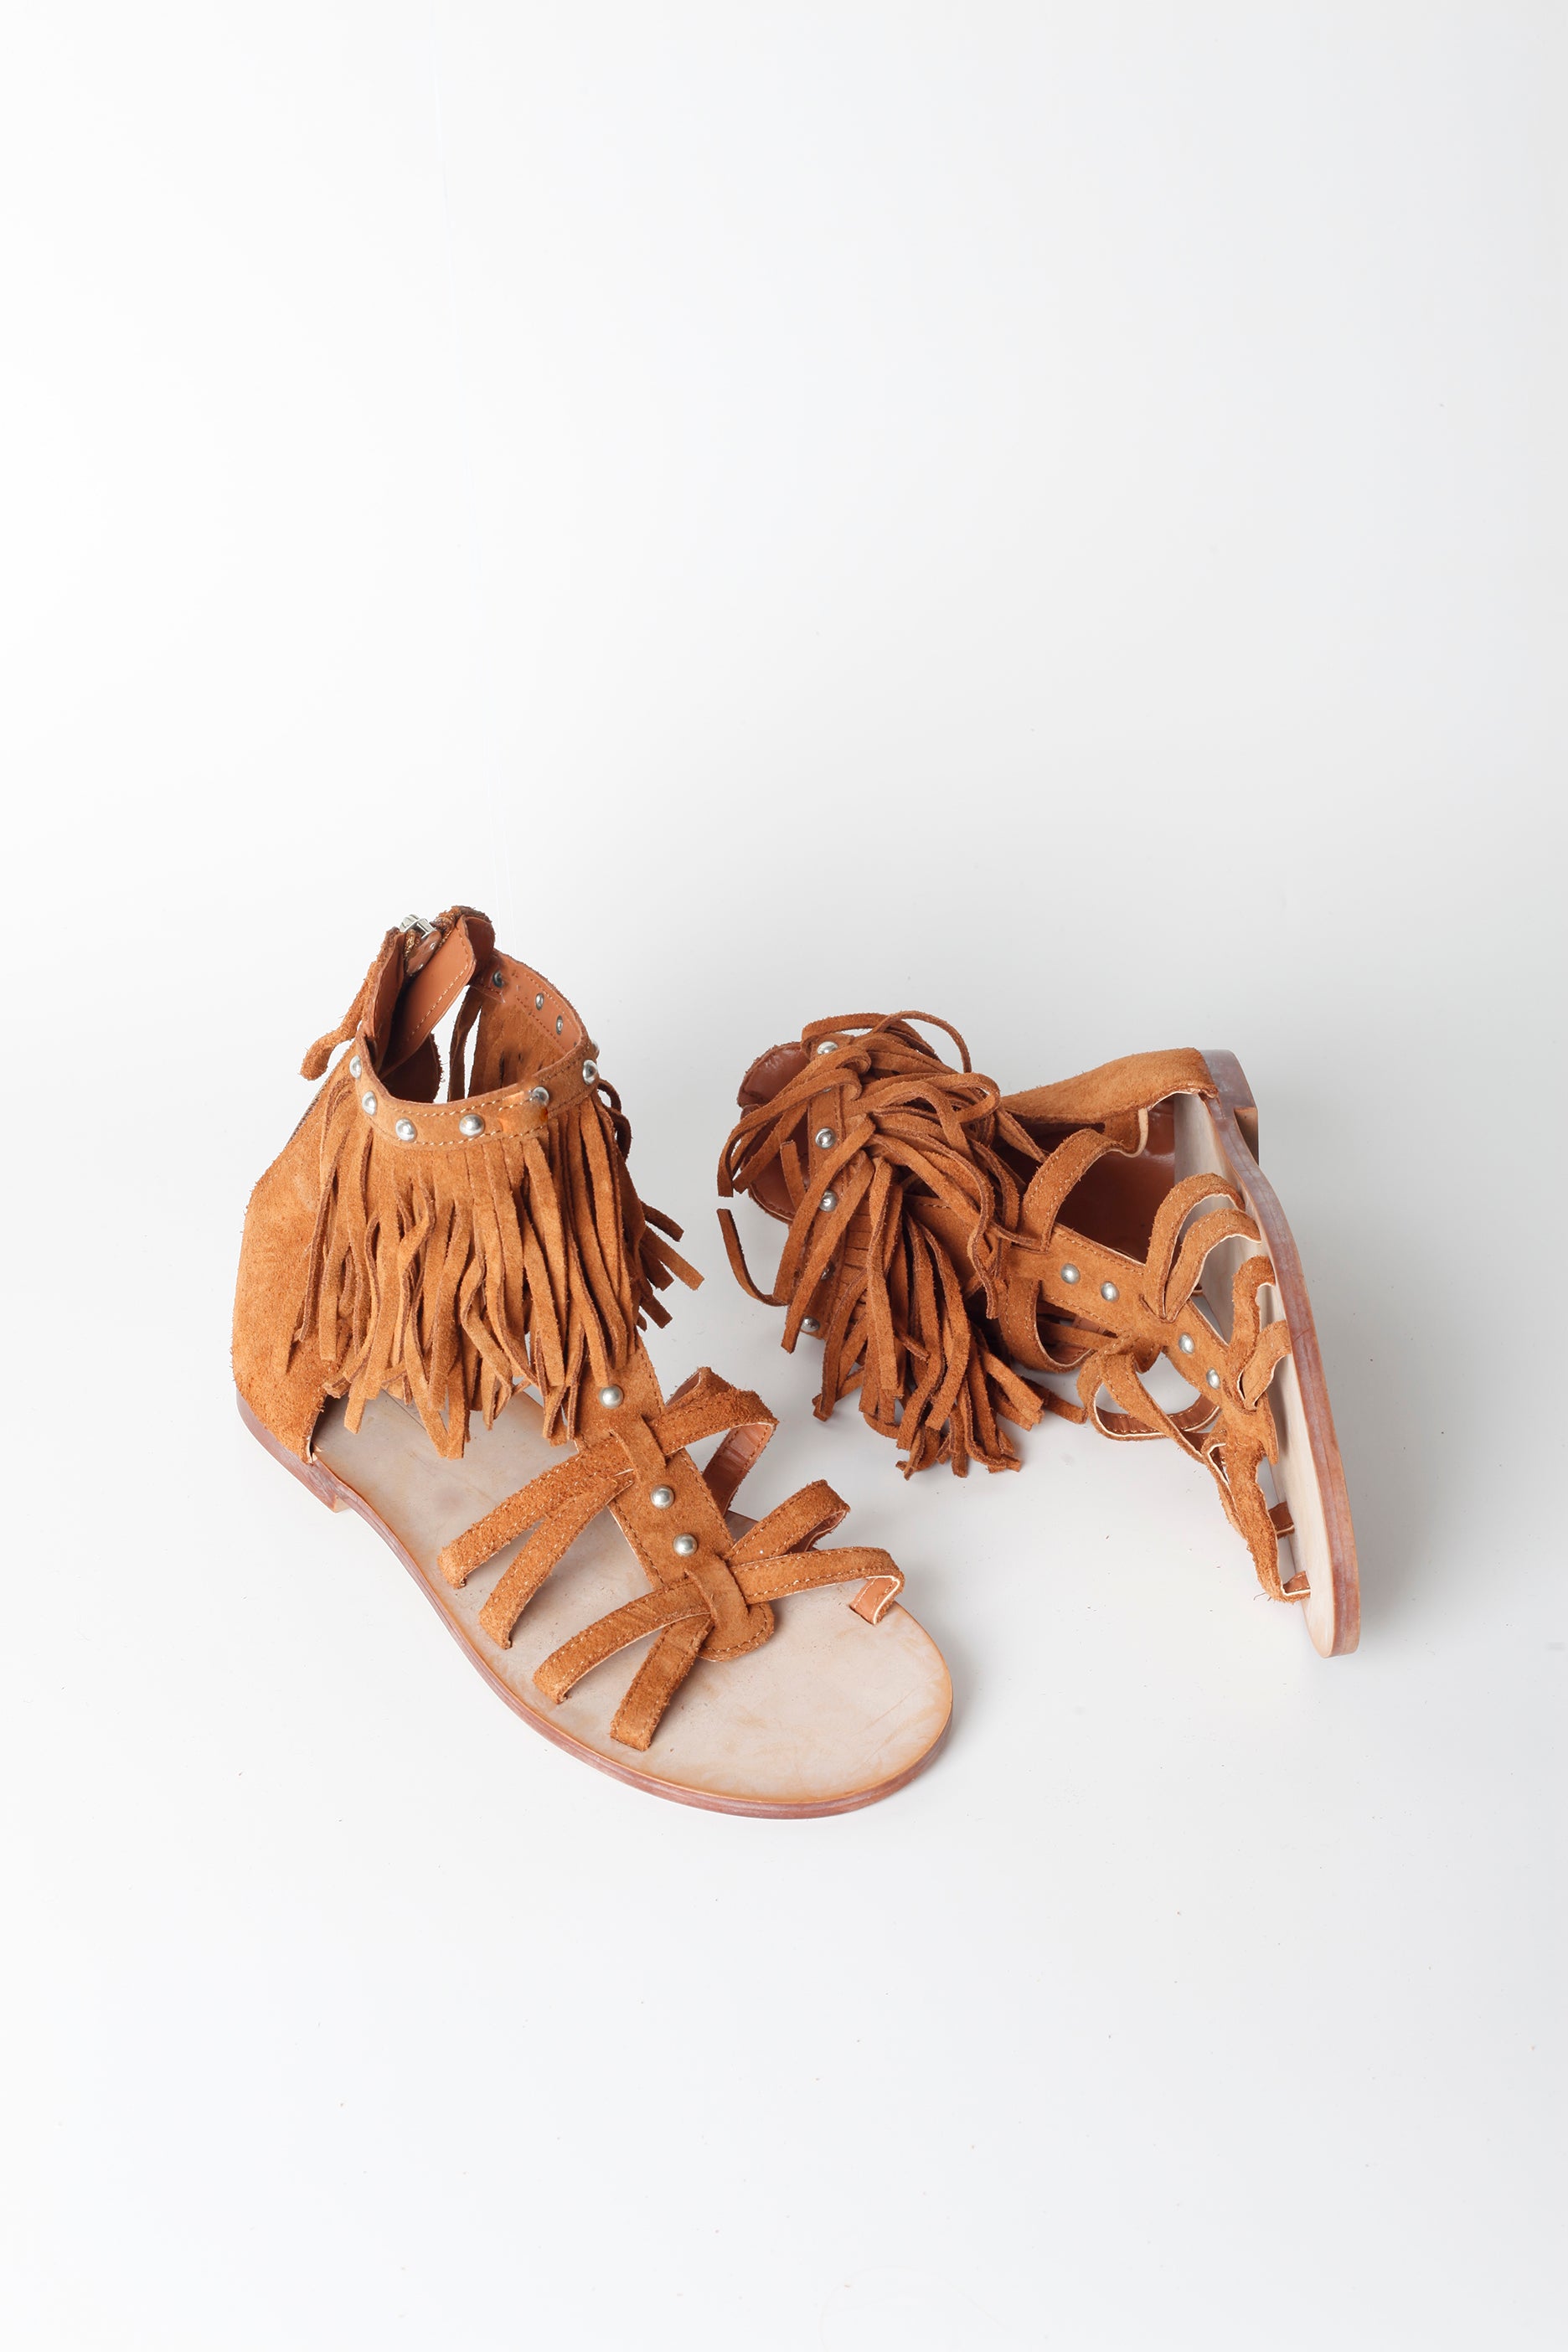 Brown Suede Gladiator Sandals with Fringe